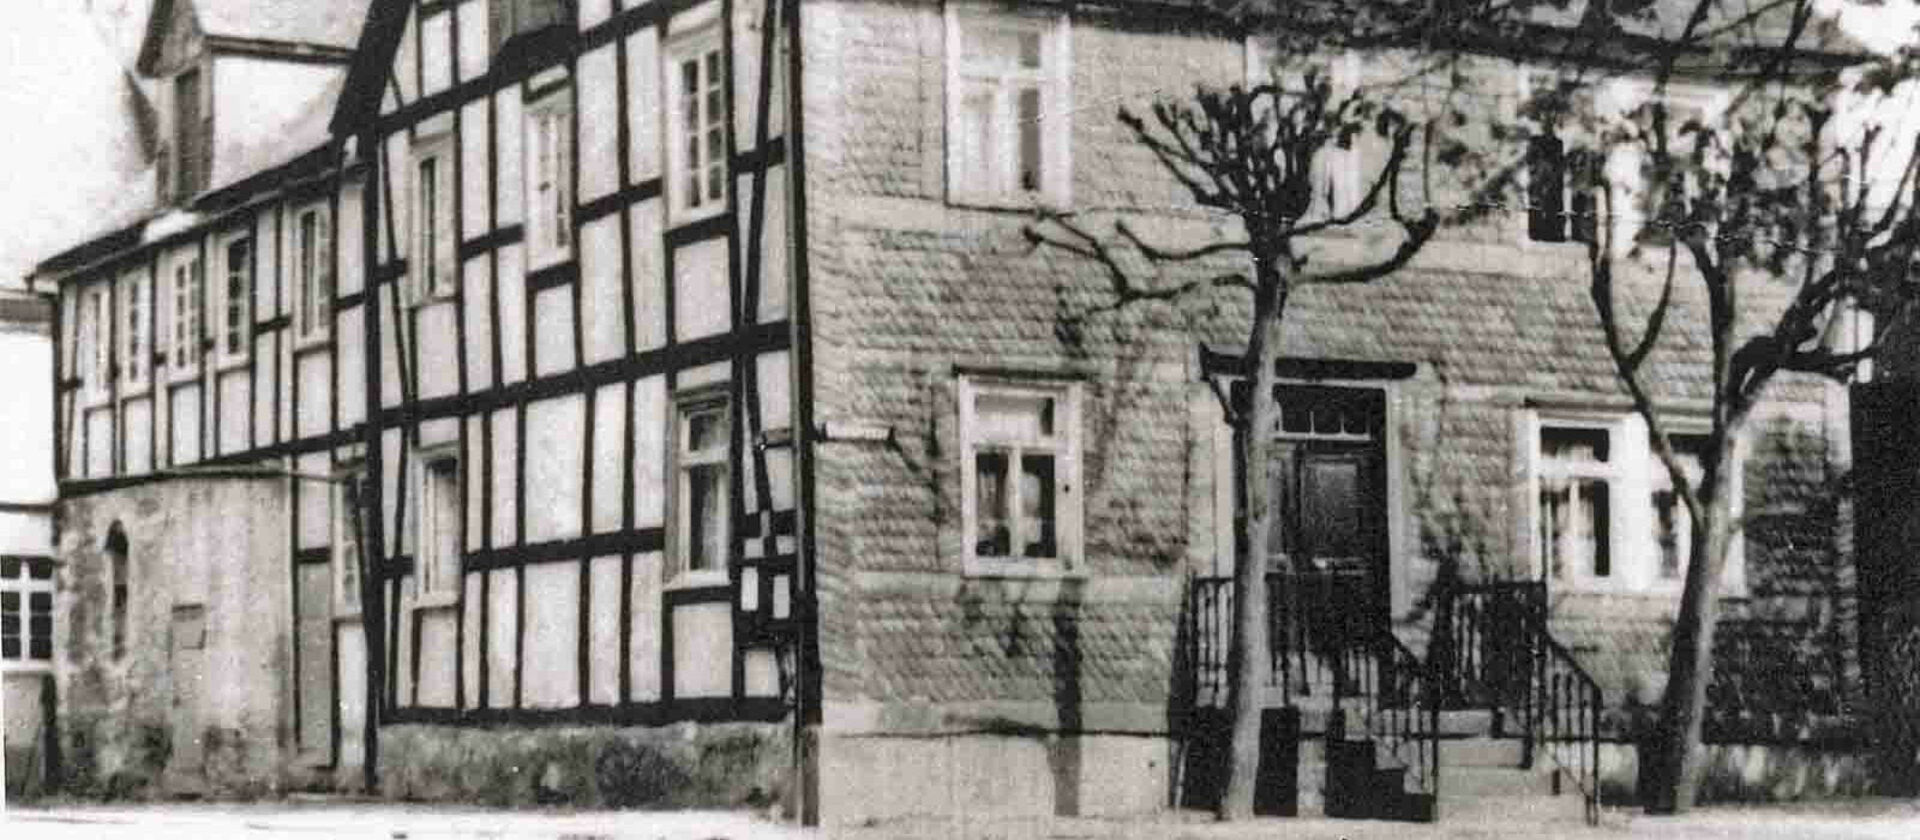 Historical photographs of the Weststraße in Schmallenberg